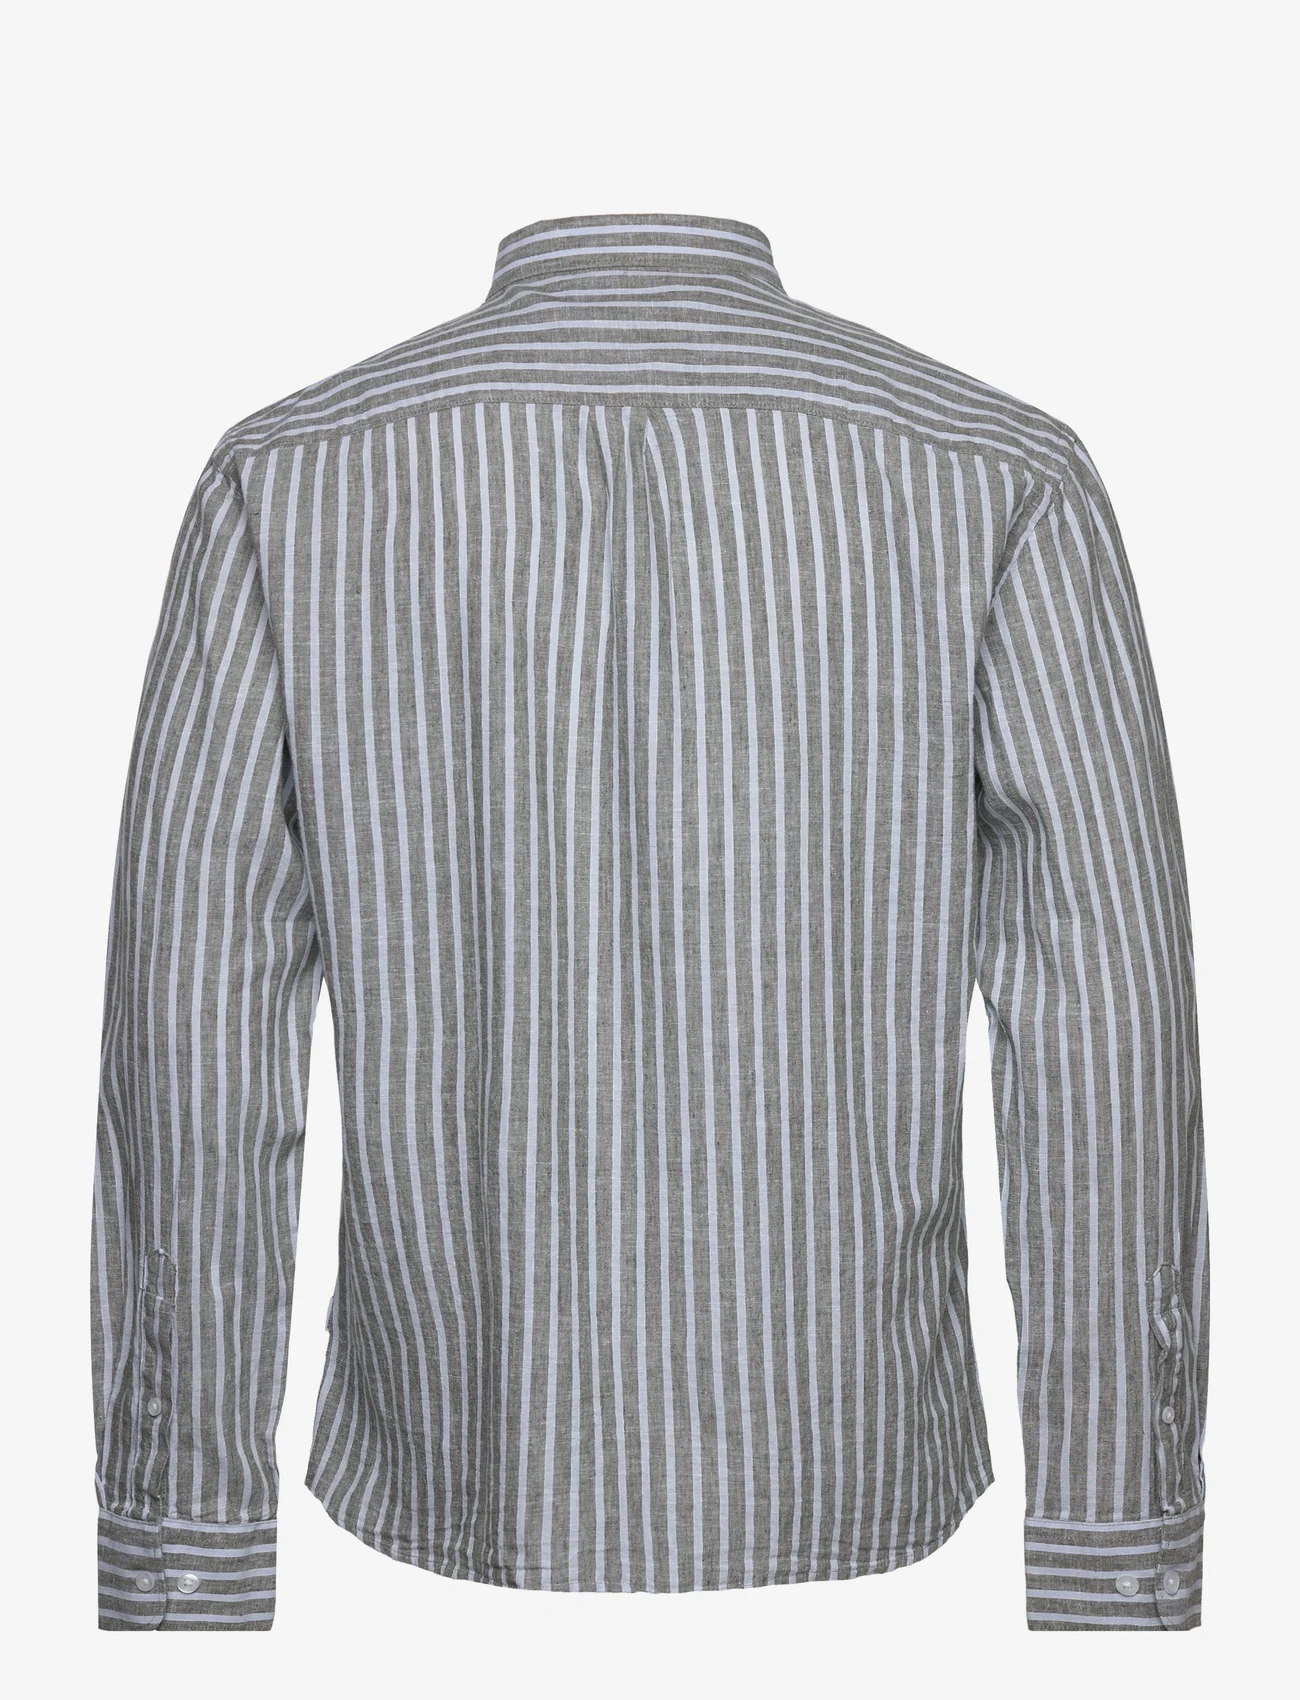 Lindbergh - Striped cotton/linen shirt L/S - linneskjortor - army - 1